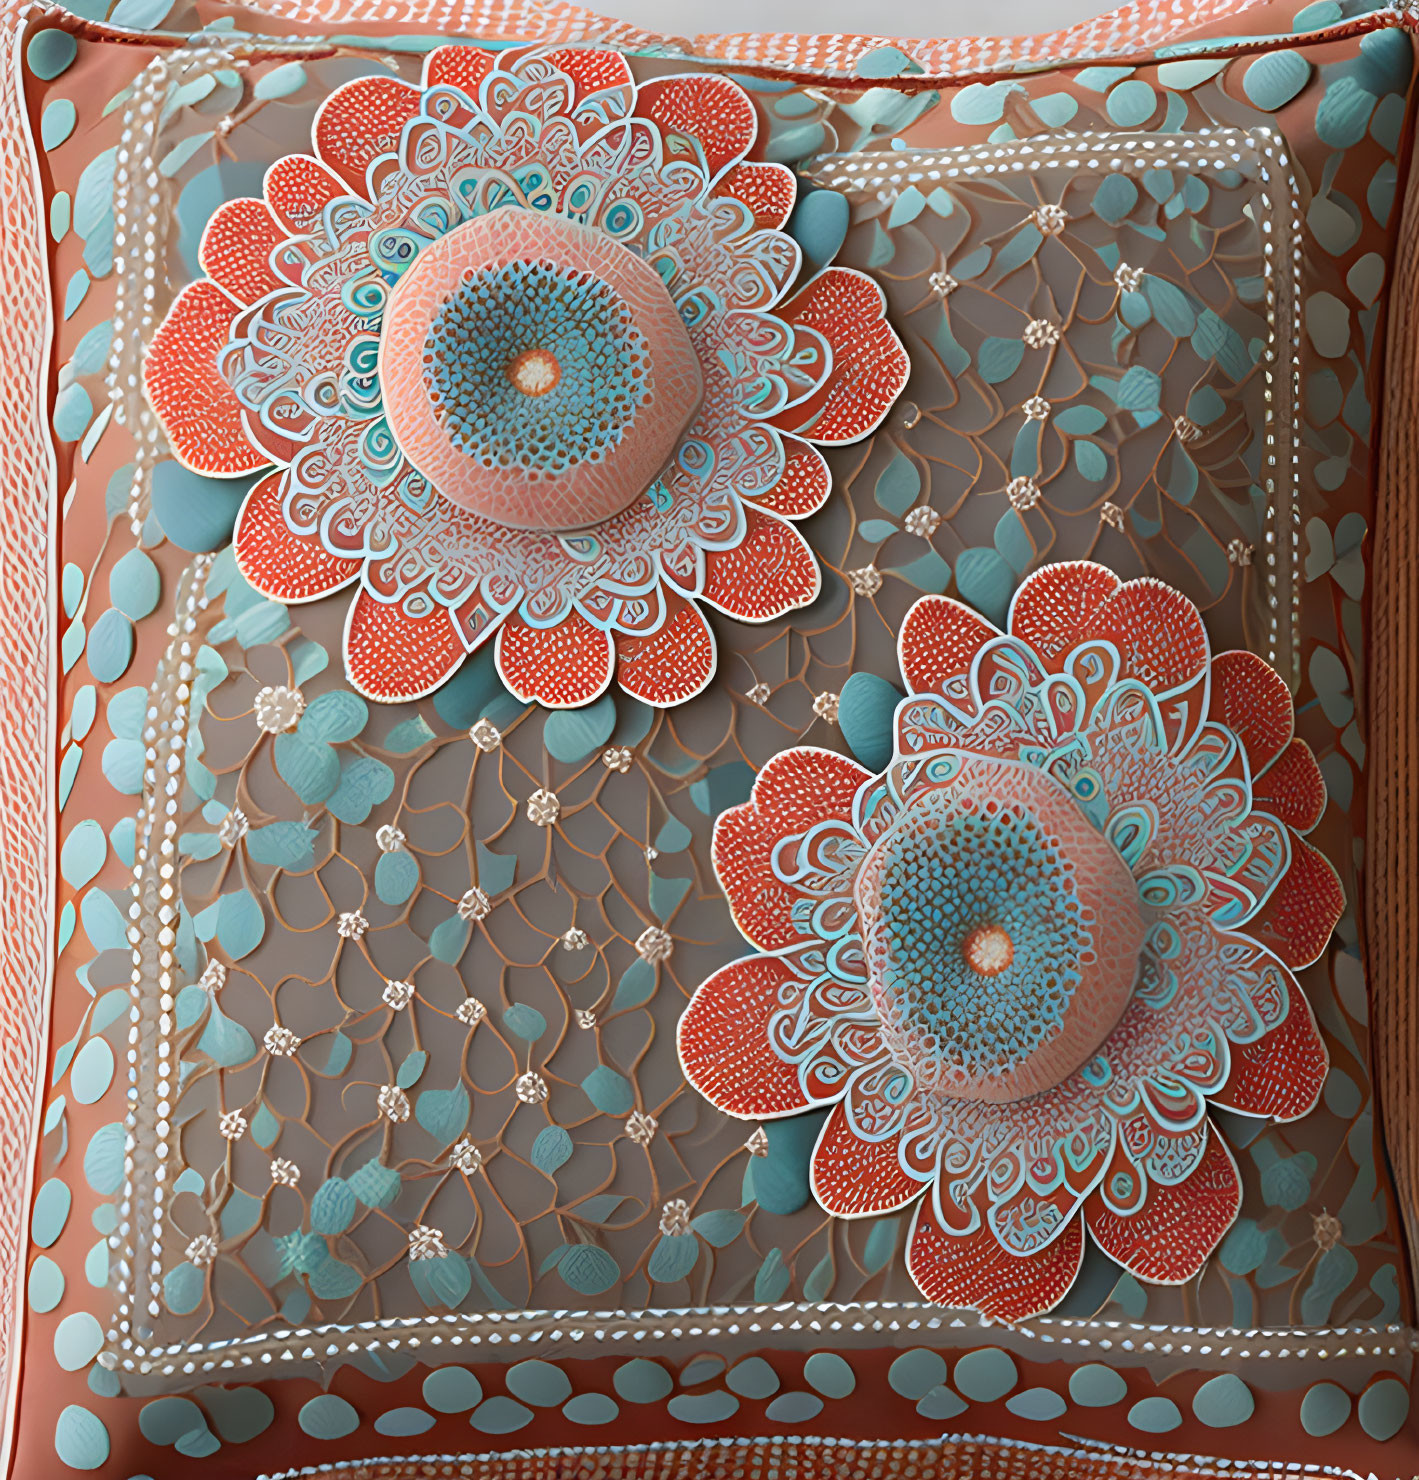 Anemone cushion - design